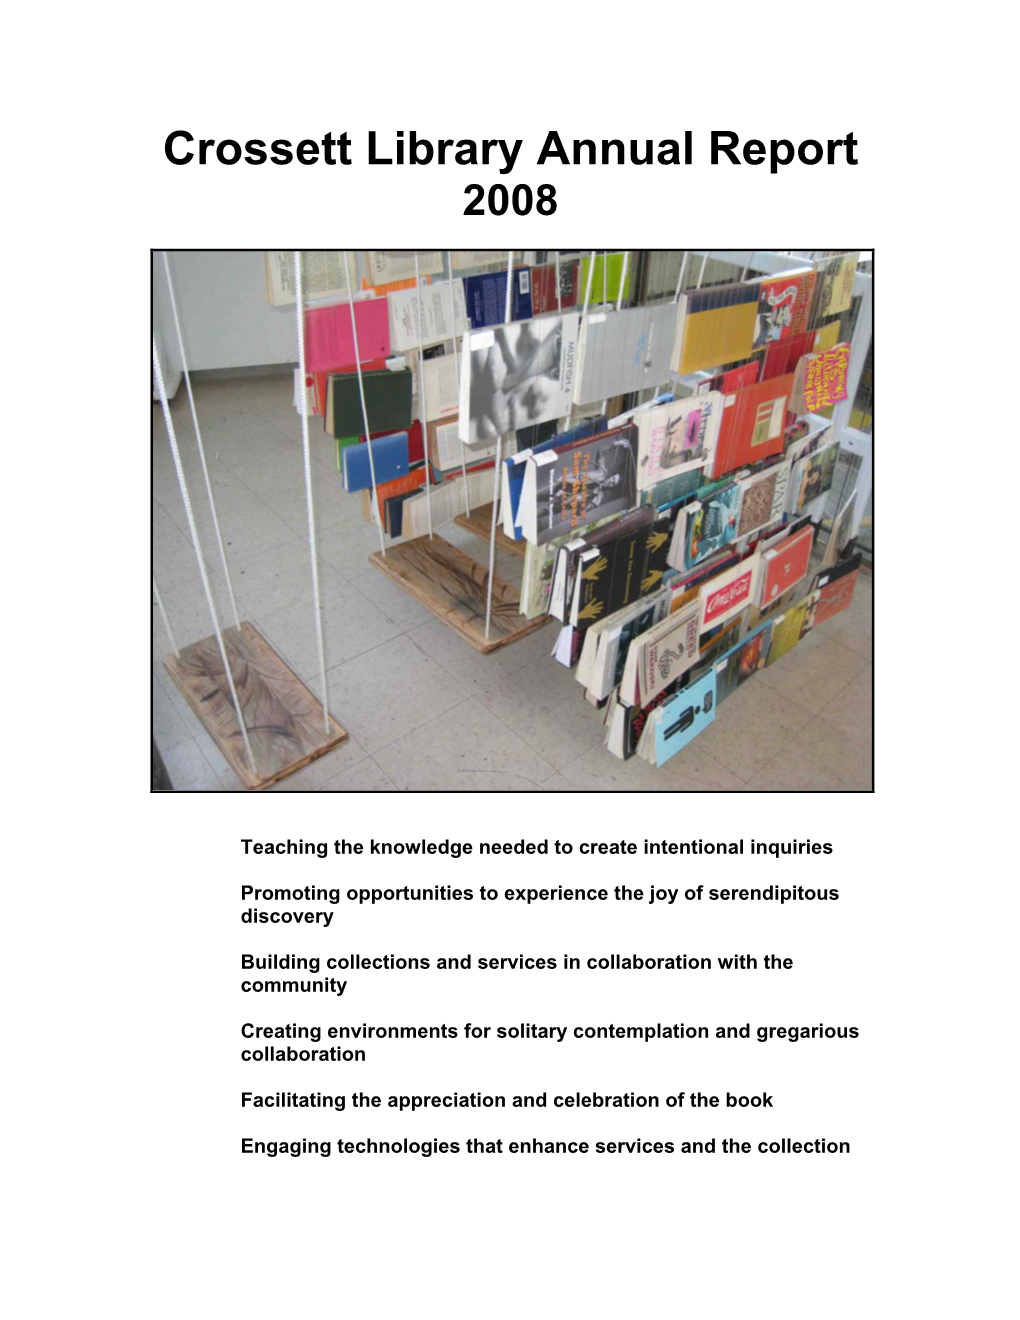 Crossett Library Annual Report 2007-2008